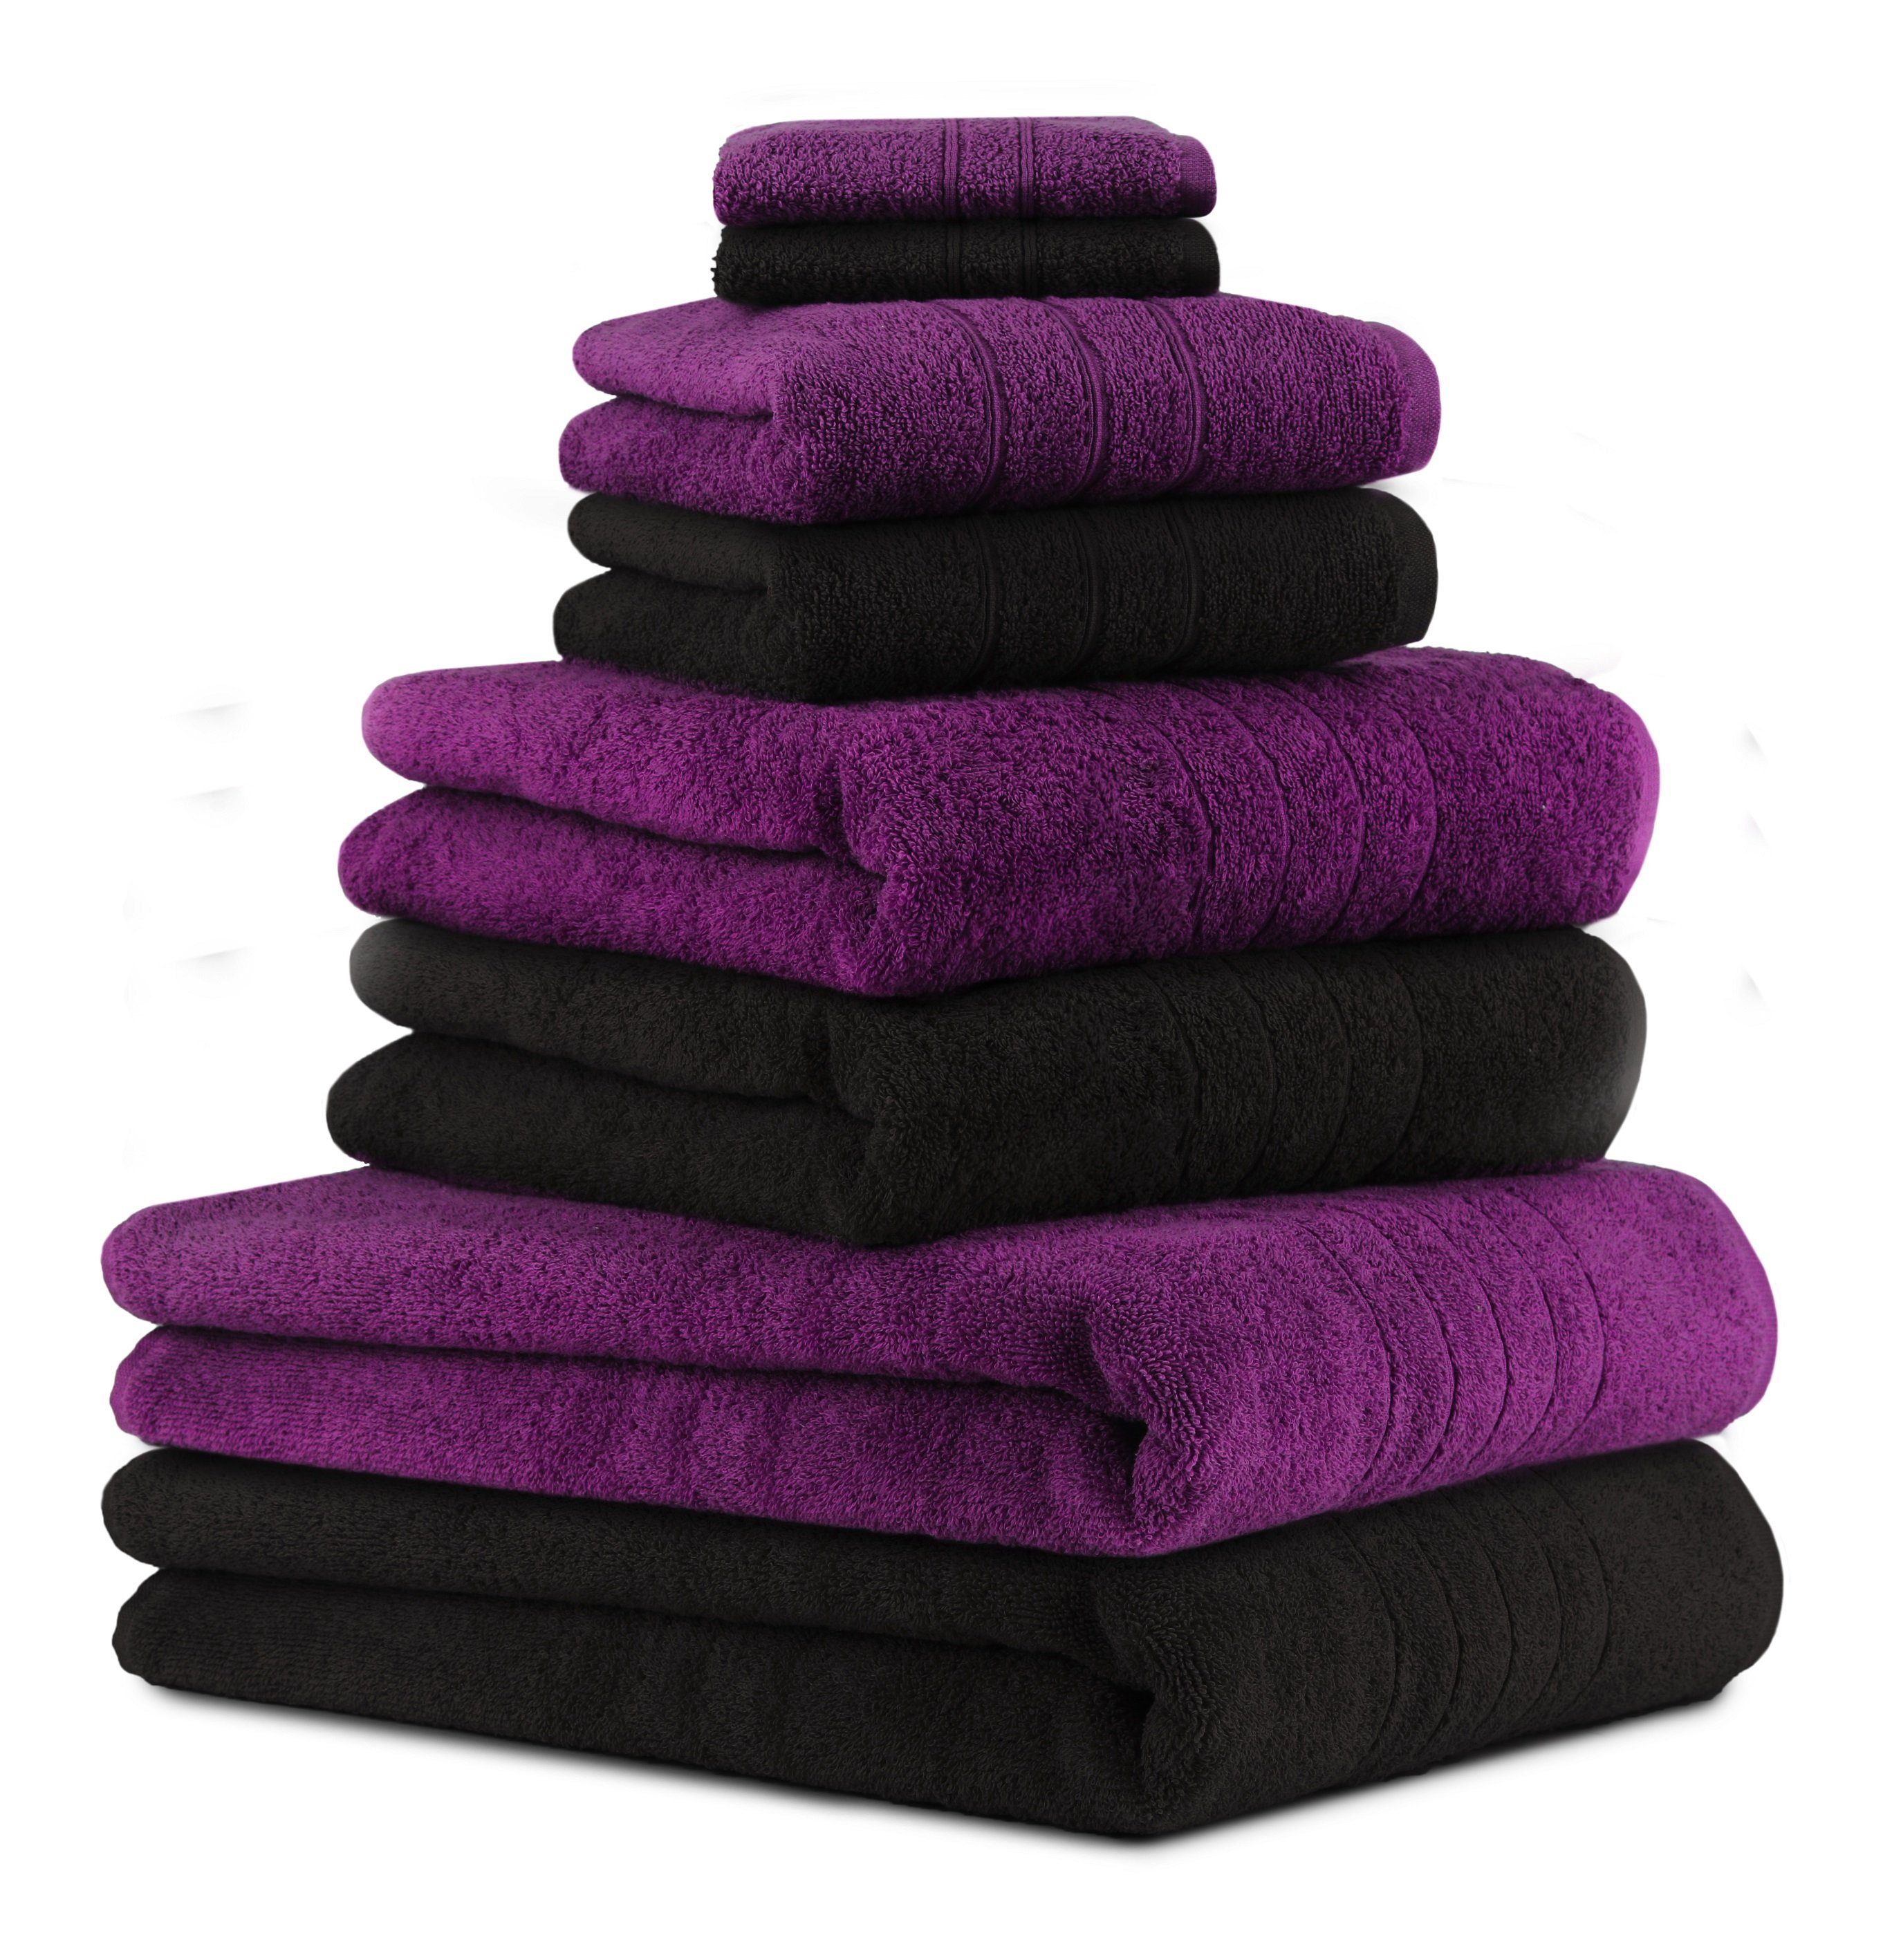 Betz Handtuch Set 8-TLG. Handtuch-Set Deluxe 100% Baumwolle 2 Badetücher 2 Duschtücher 2 Handtücher 2 Seiftücher Farbe Pflaume und schwarz, 100% Baumwolle, (8-tlg)